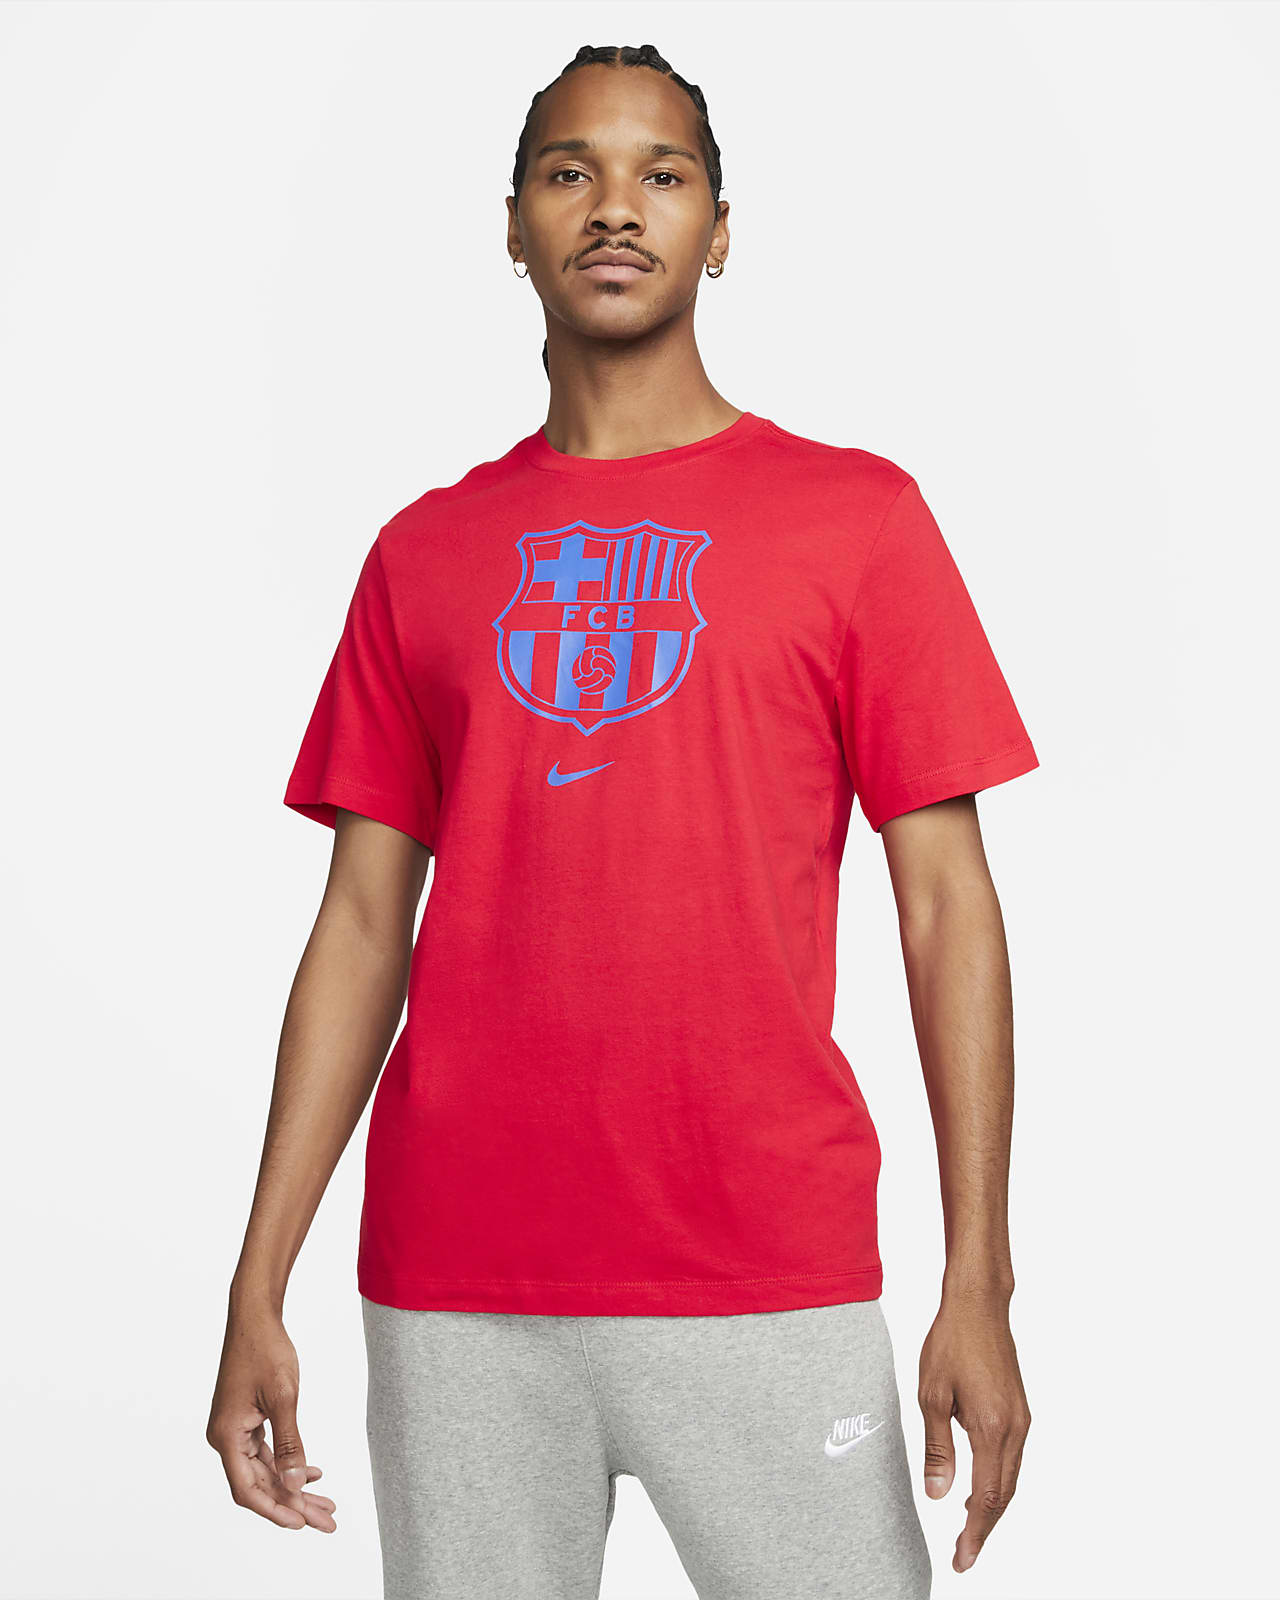 It's cheap Thorns at least FC Barcelona Crest Men's Soccer T-Shirt. Nike.com